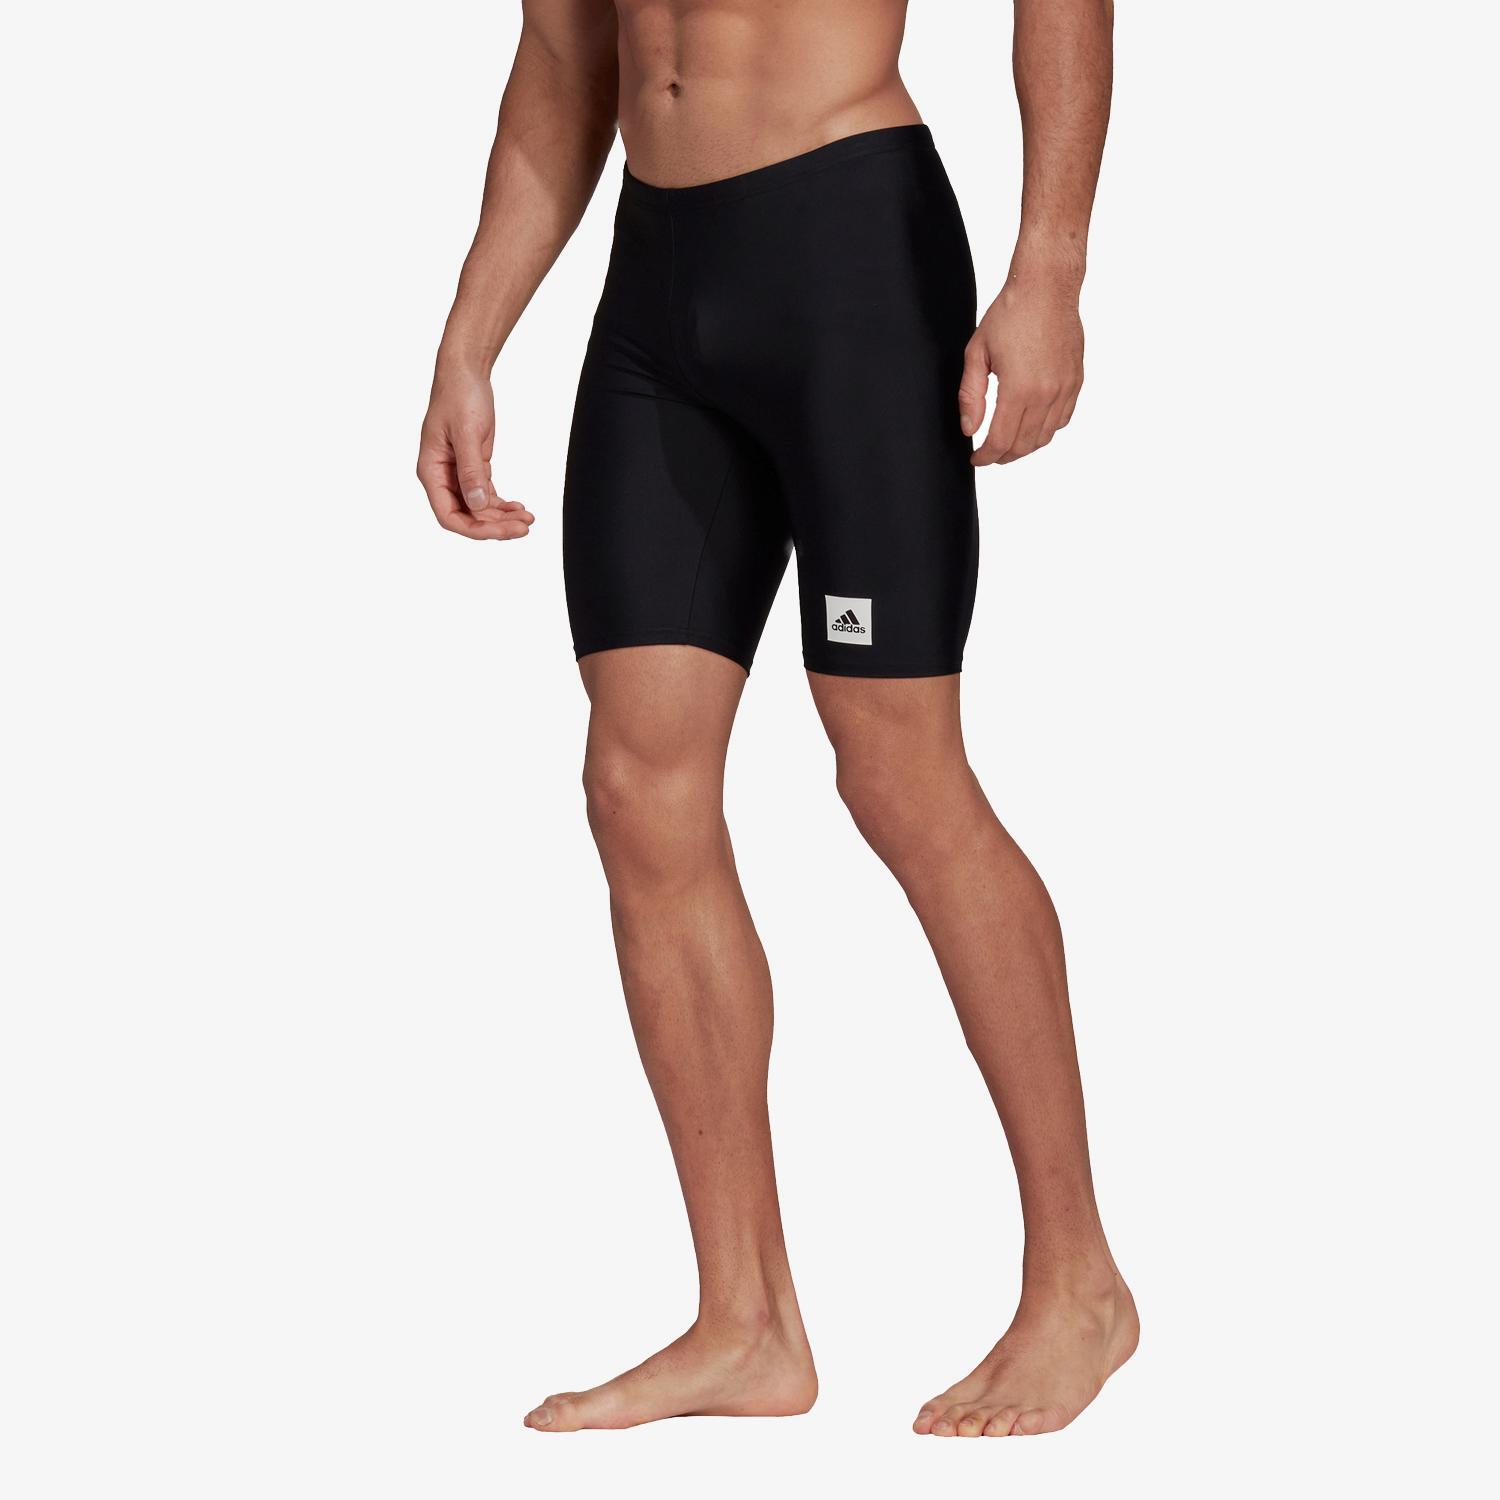 Maillot de Bain adidas - Noir - Maillot de bain Bermuda Homme sports taille S